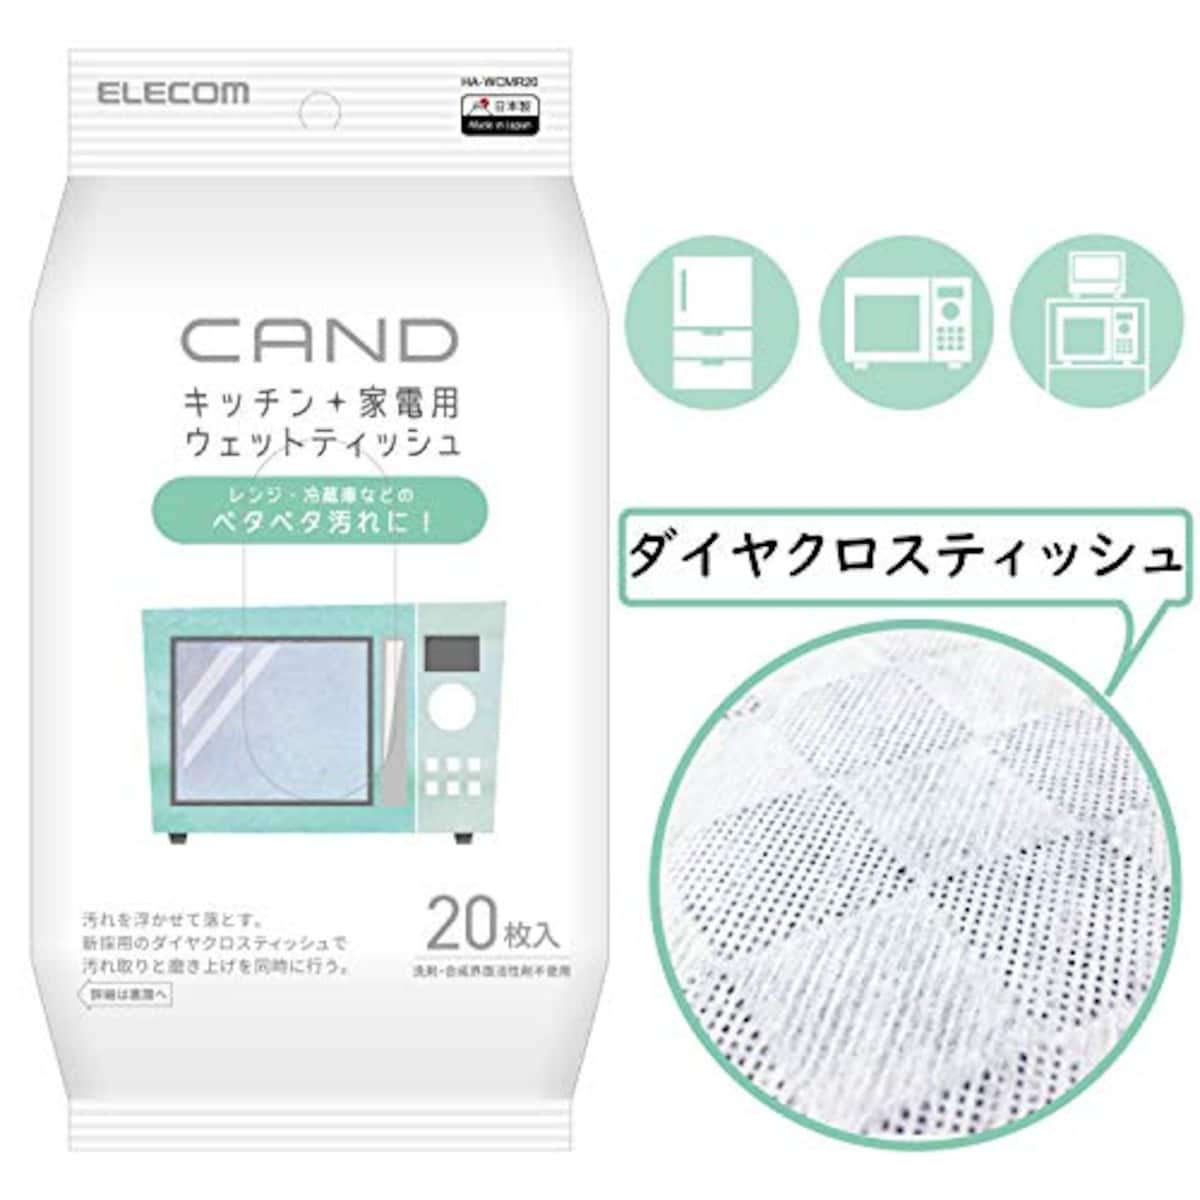 CAND キッチン・家電クリーナー